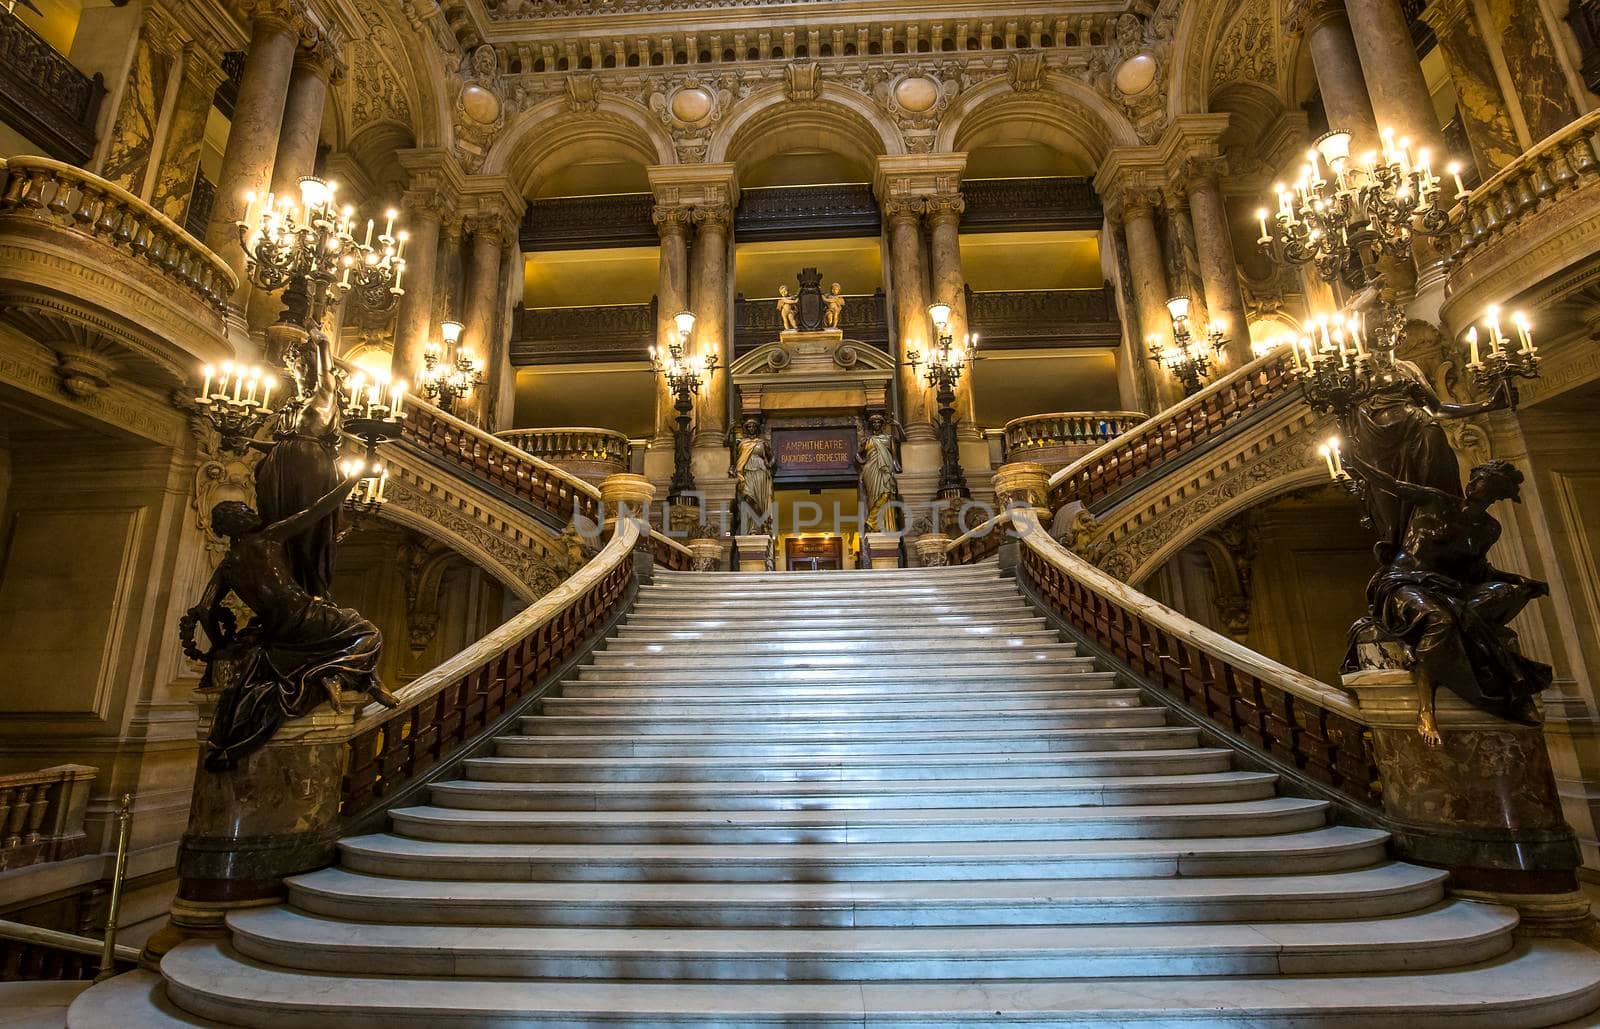 The Palais Garnier, Opera of Paris, interiors and details by photogolfer